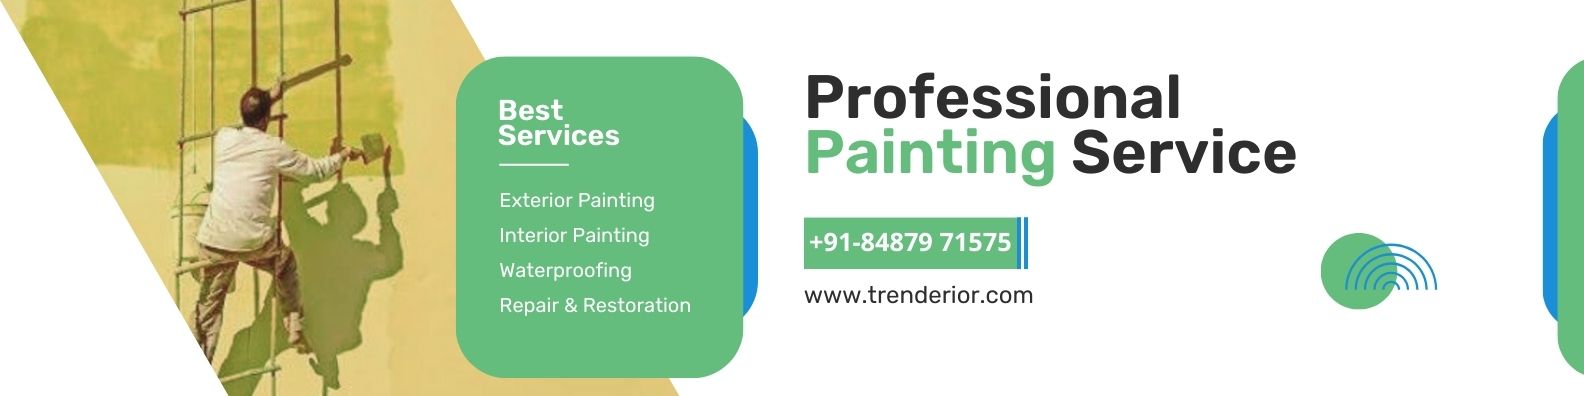 Trenderior Professional Painting Service